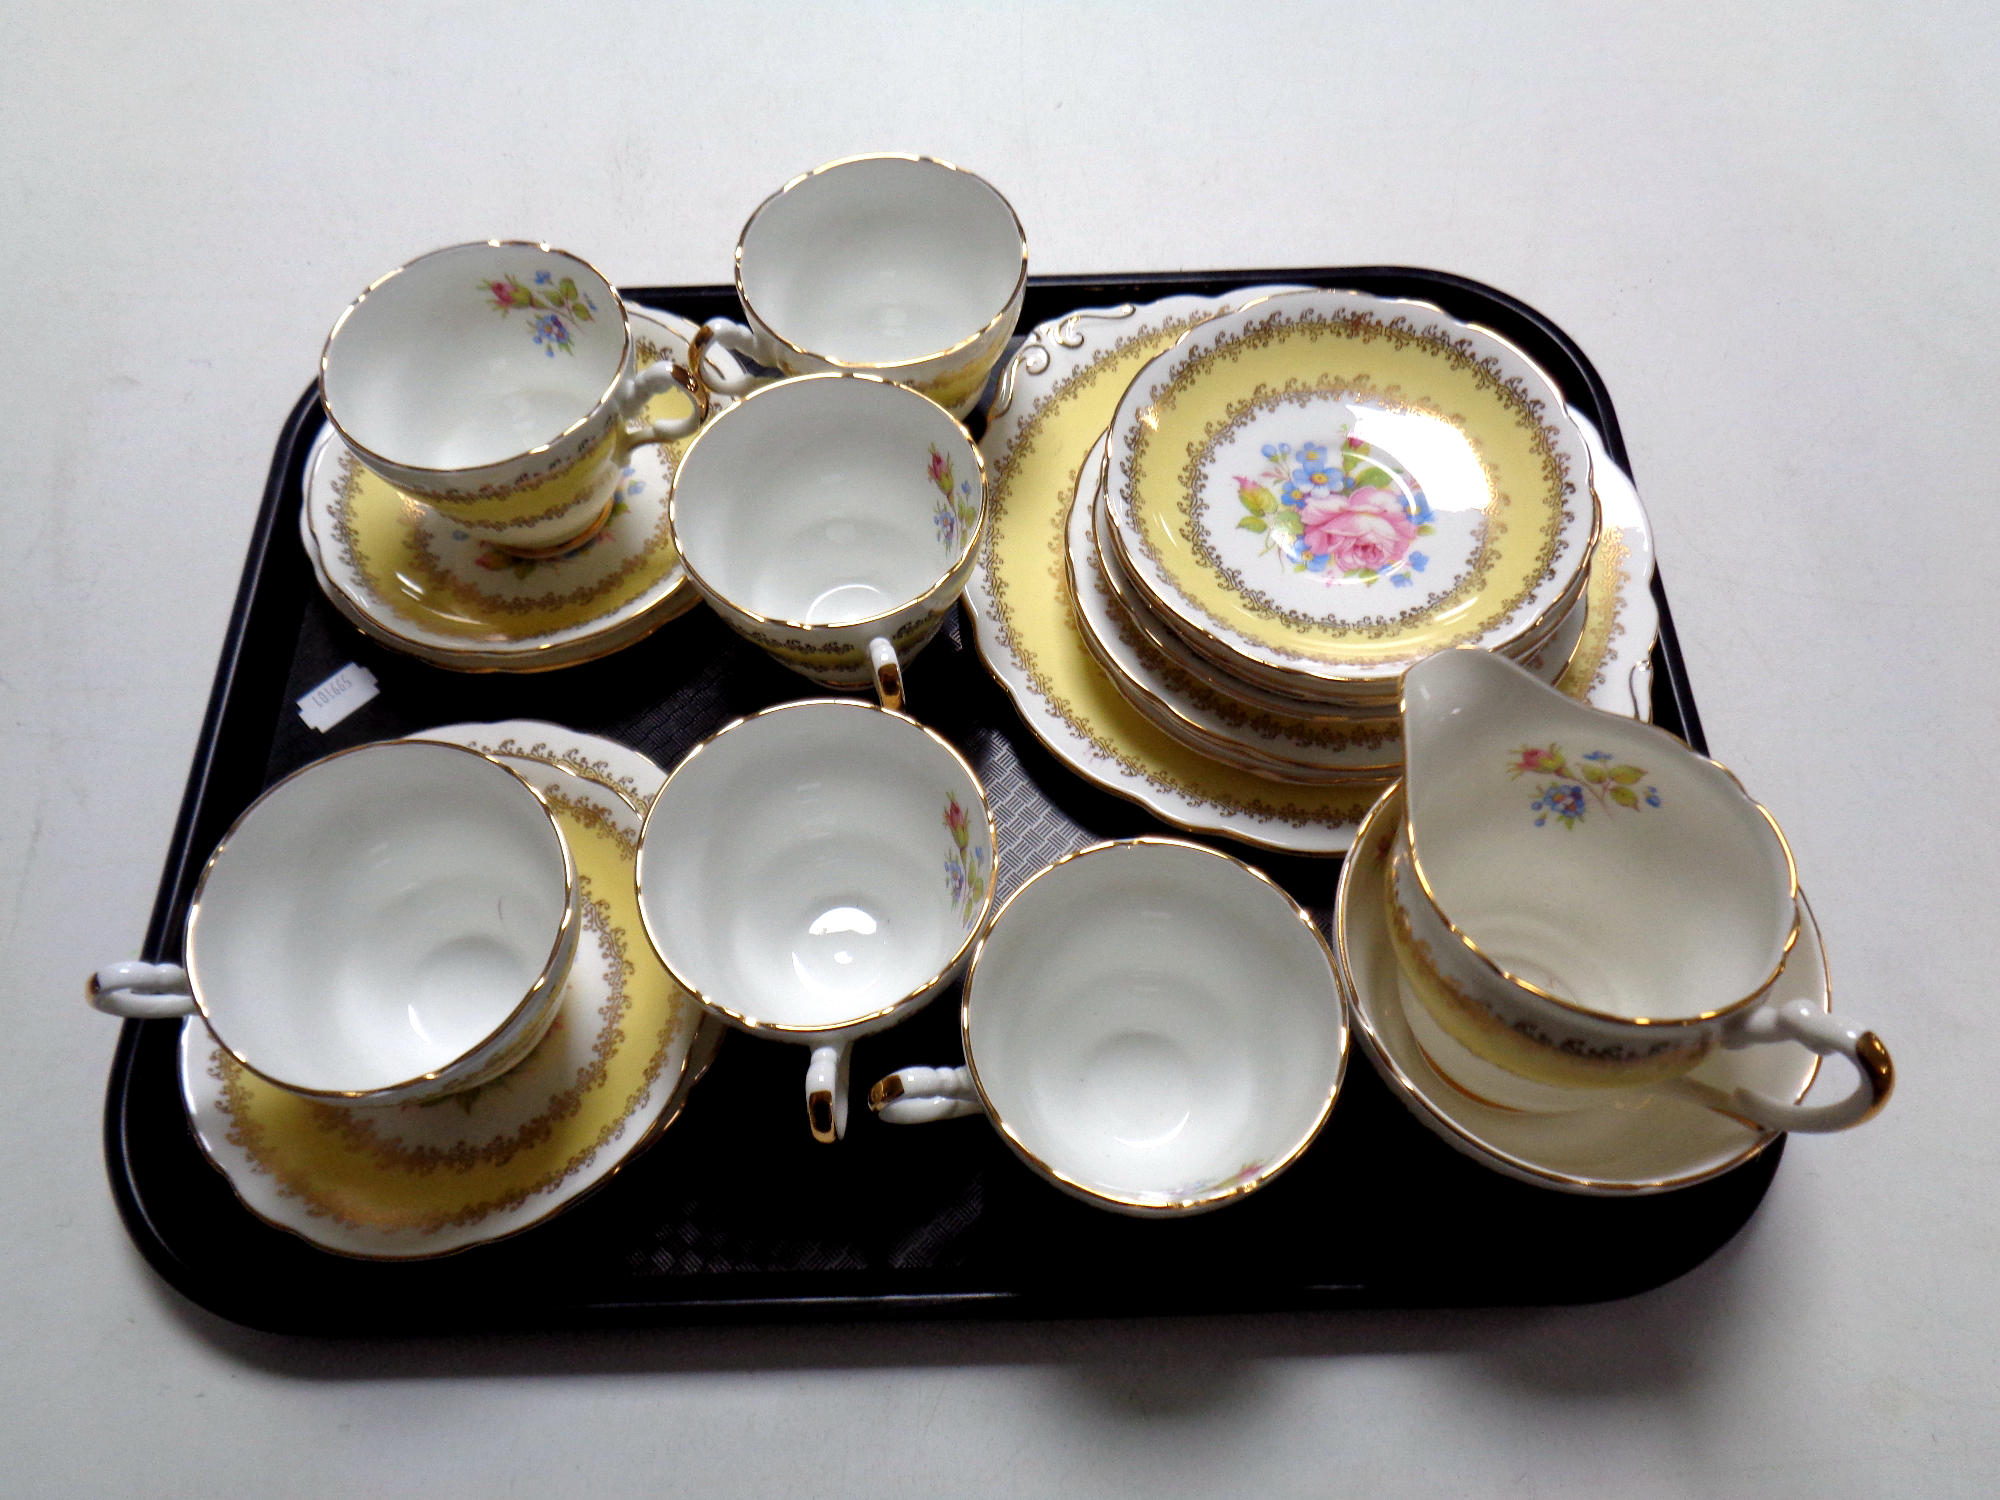 A tray containing a 21 piece Majestic bone china tea service